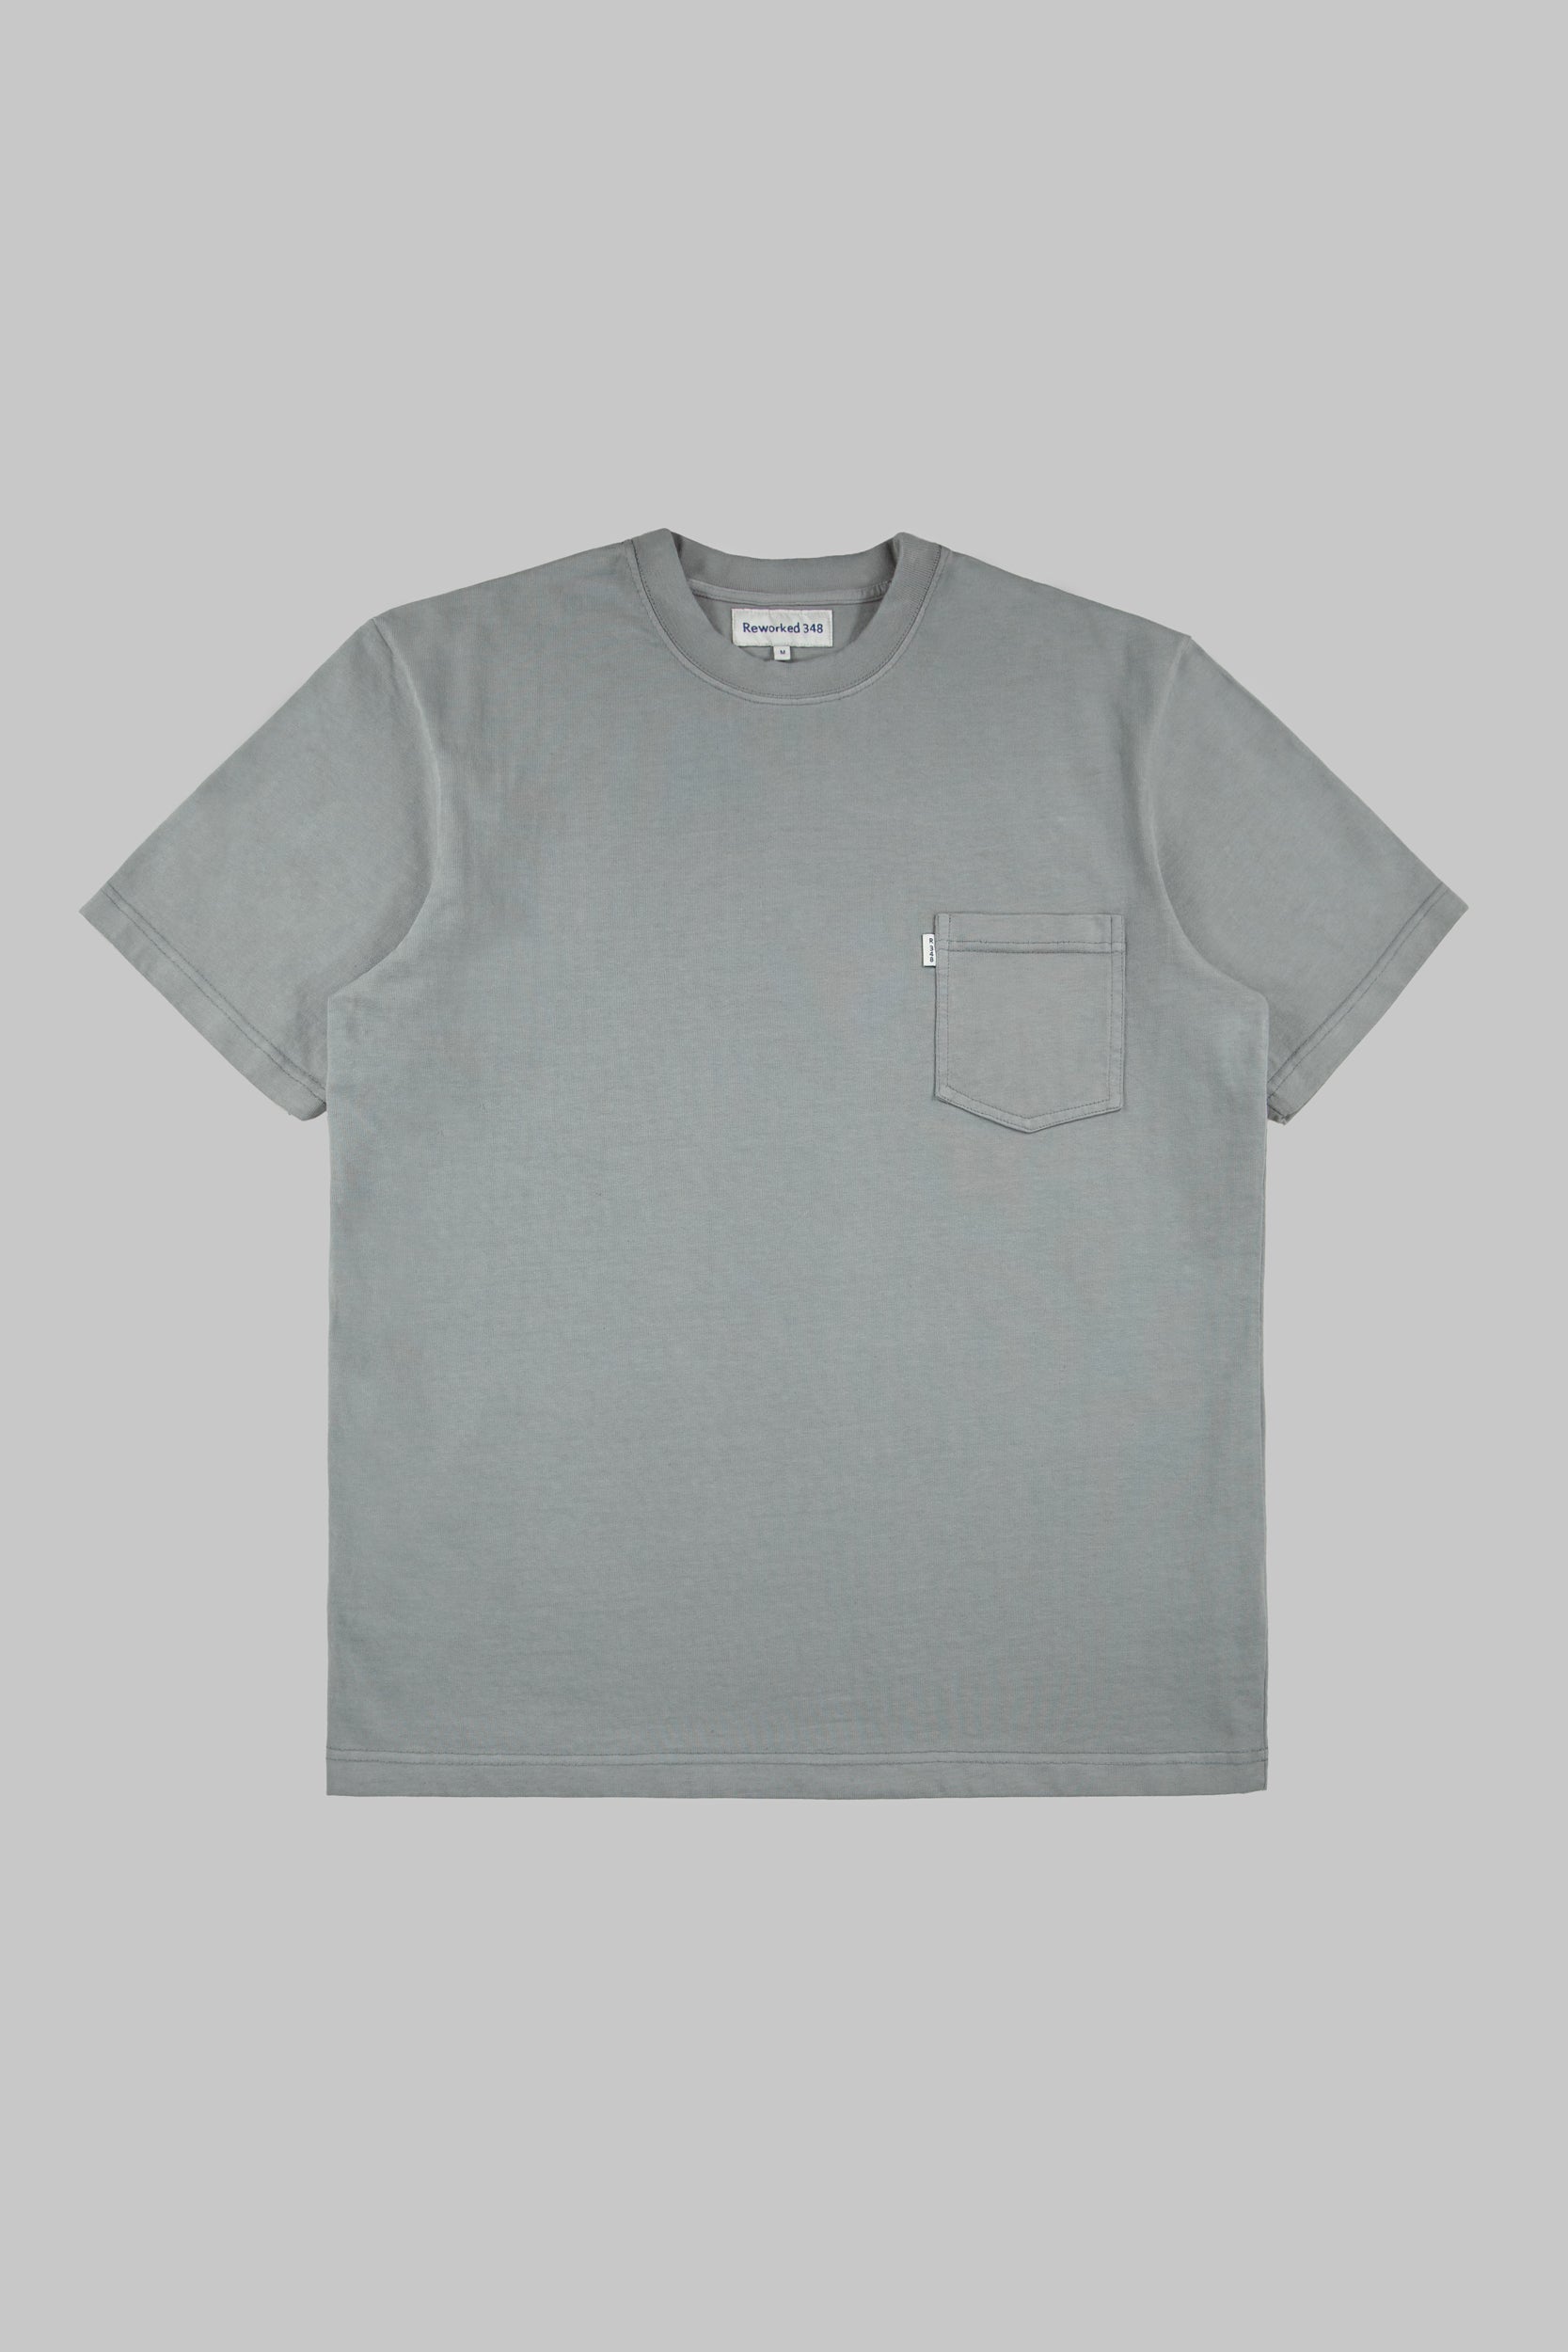 Pocket T-Shirt Grey